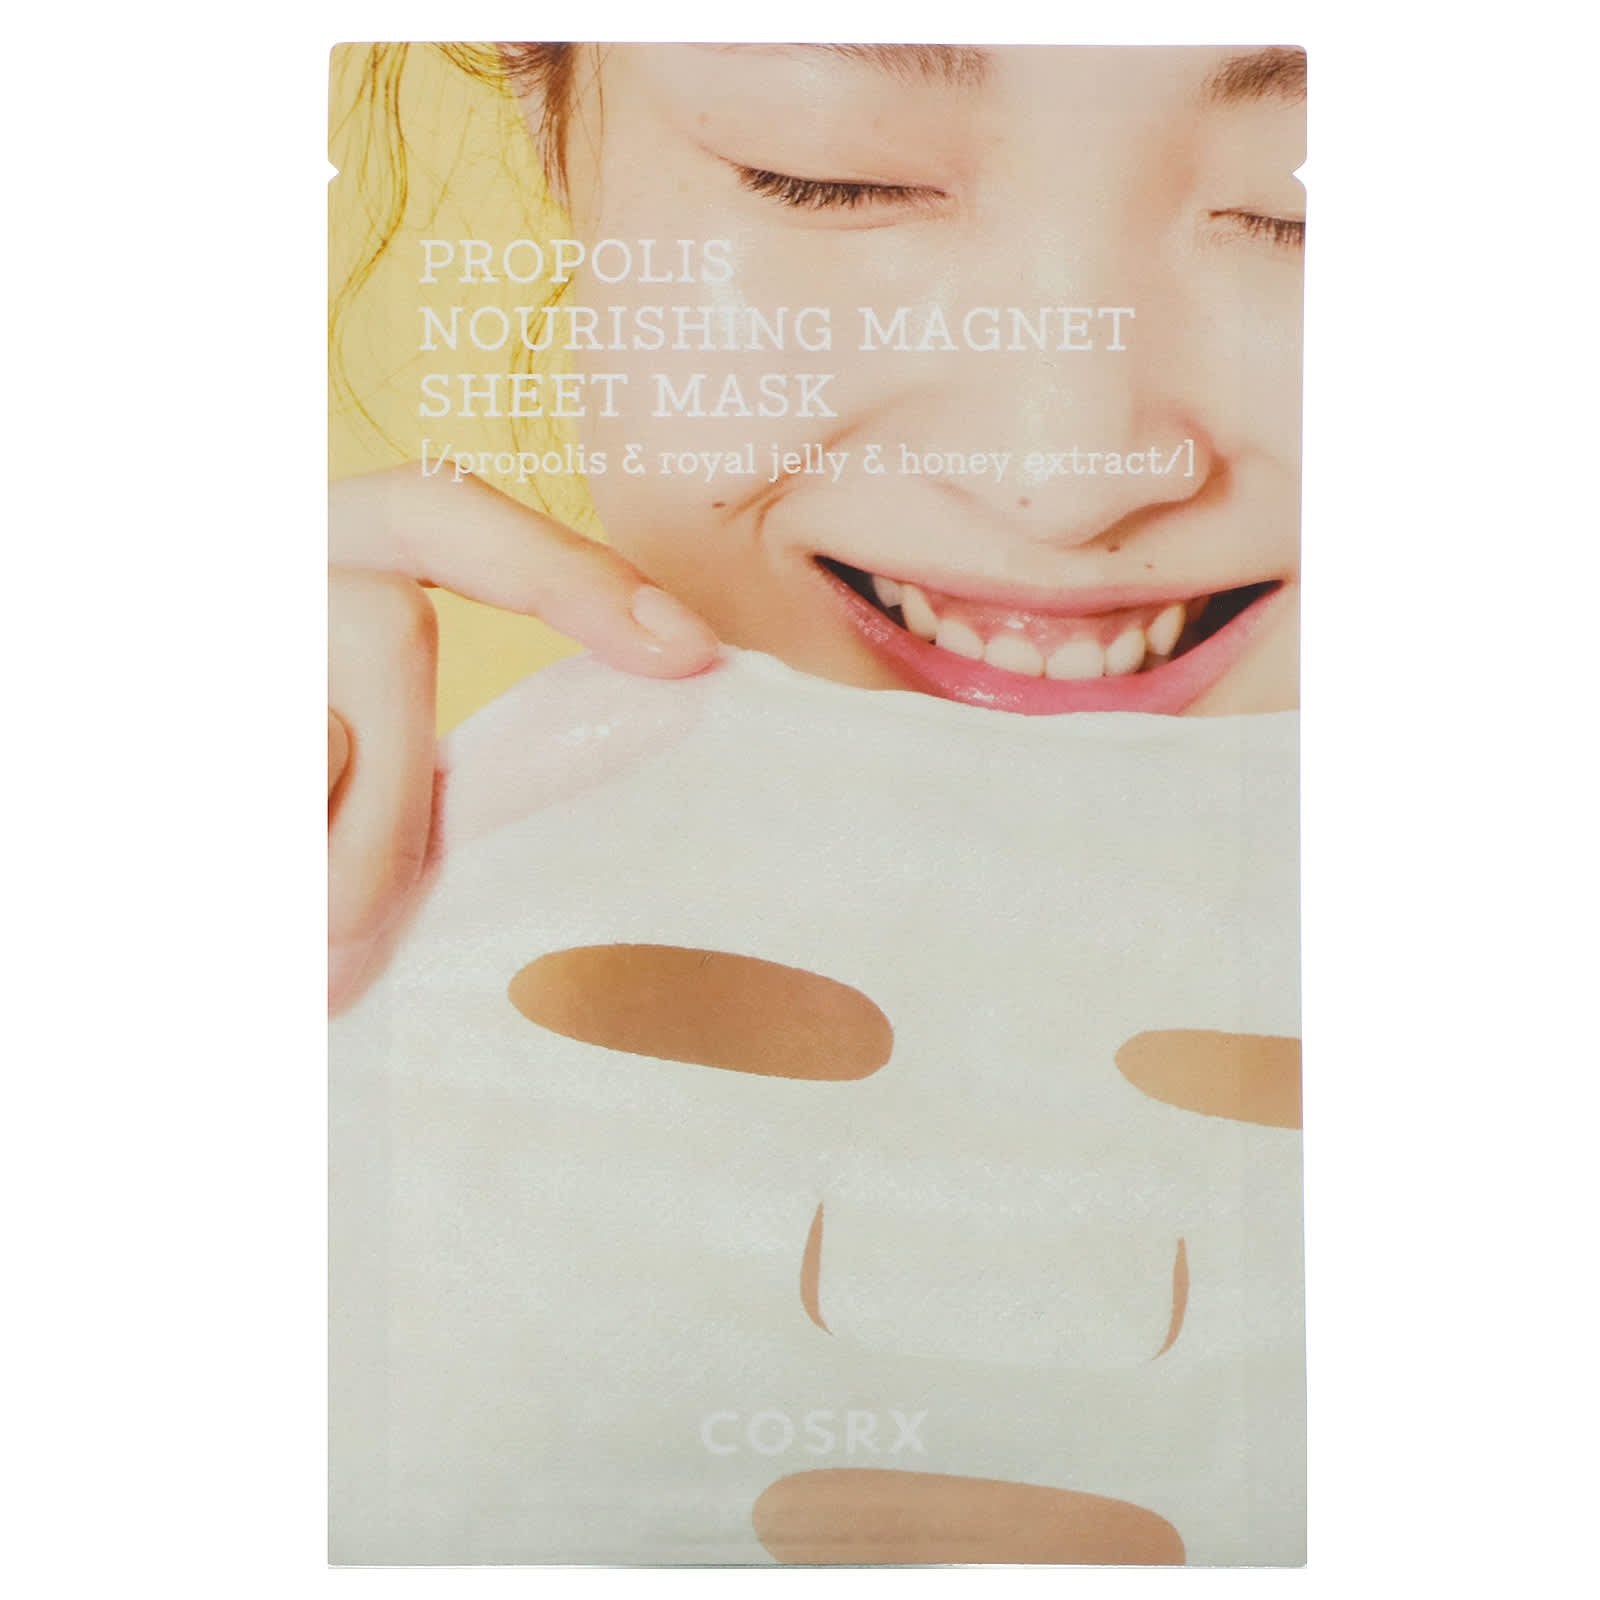 Cosrx, Full Fit, Propolis Nourishing Magnet Beauty Sheet Mask, 1 Sheet (21 ml)